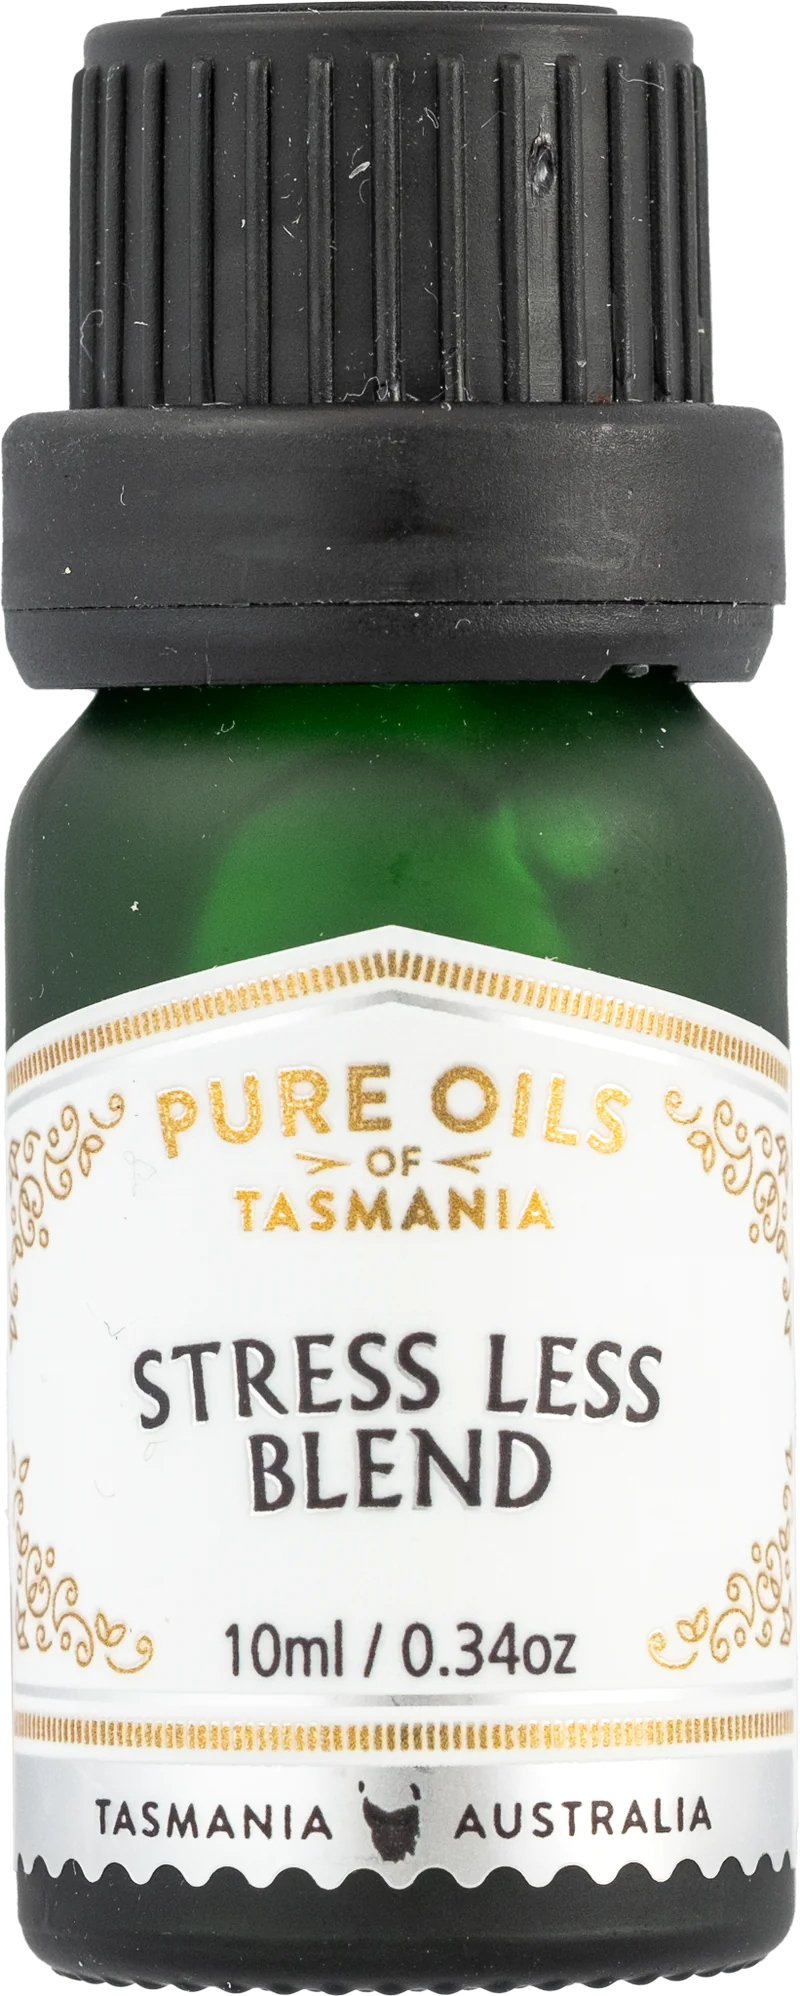 Pure Oil Blends - Pure Oils of Tasmania Body pure oils tasmania Stress Less Blend 